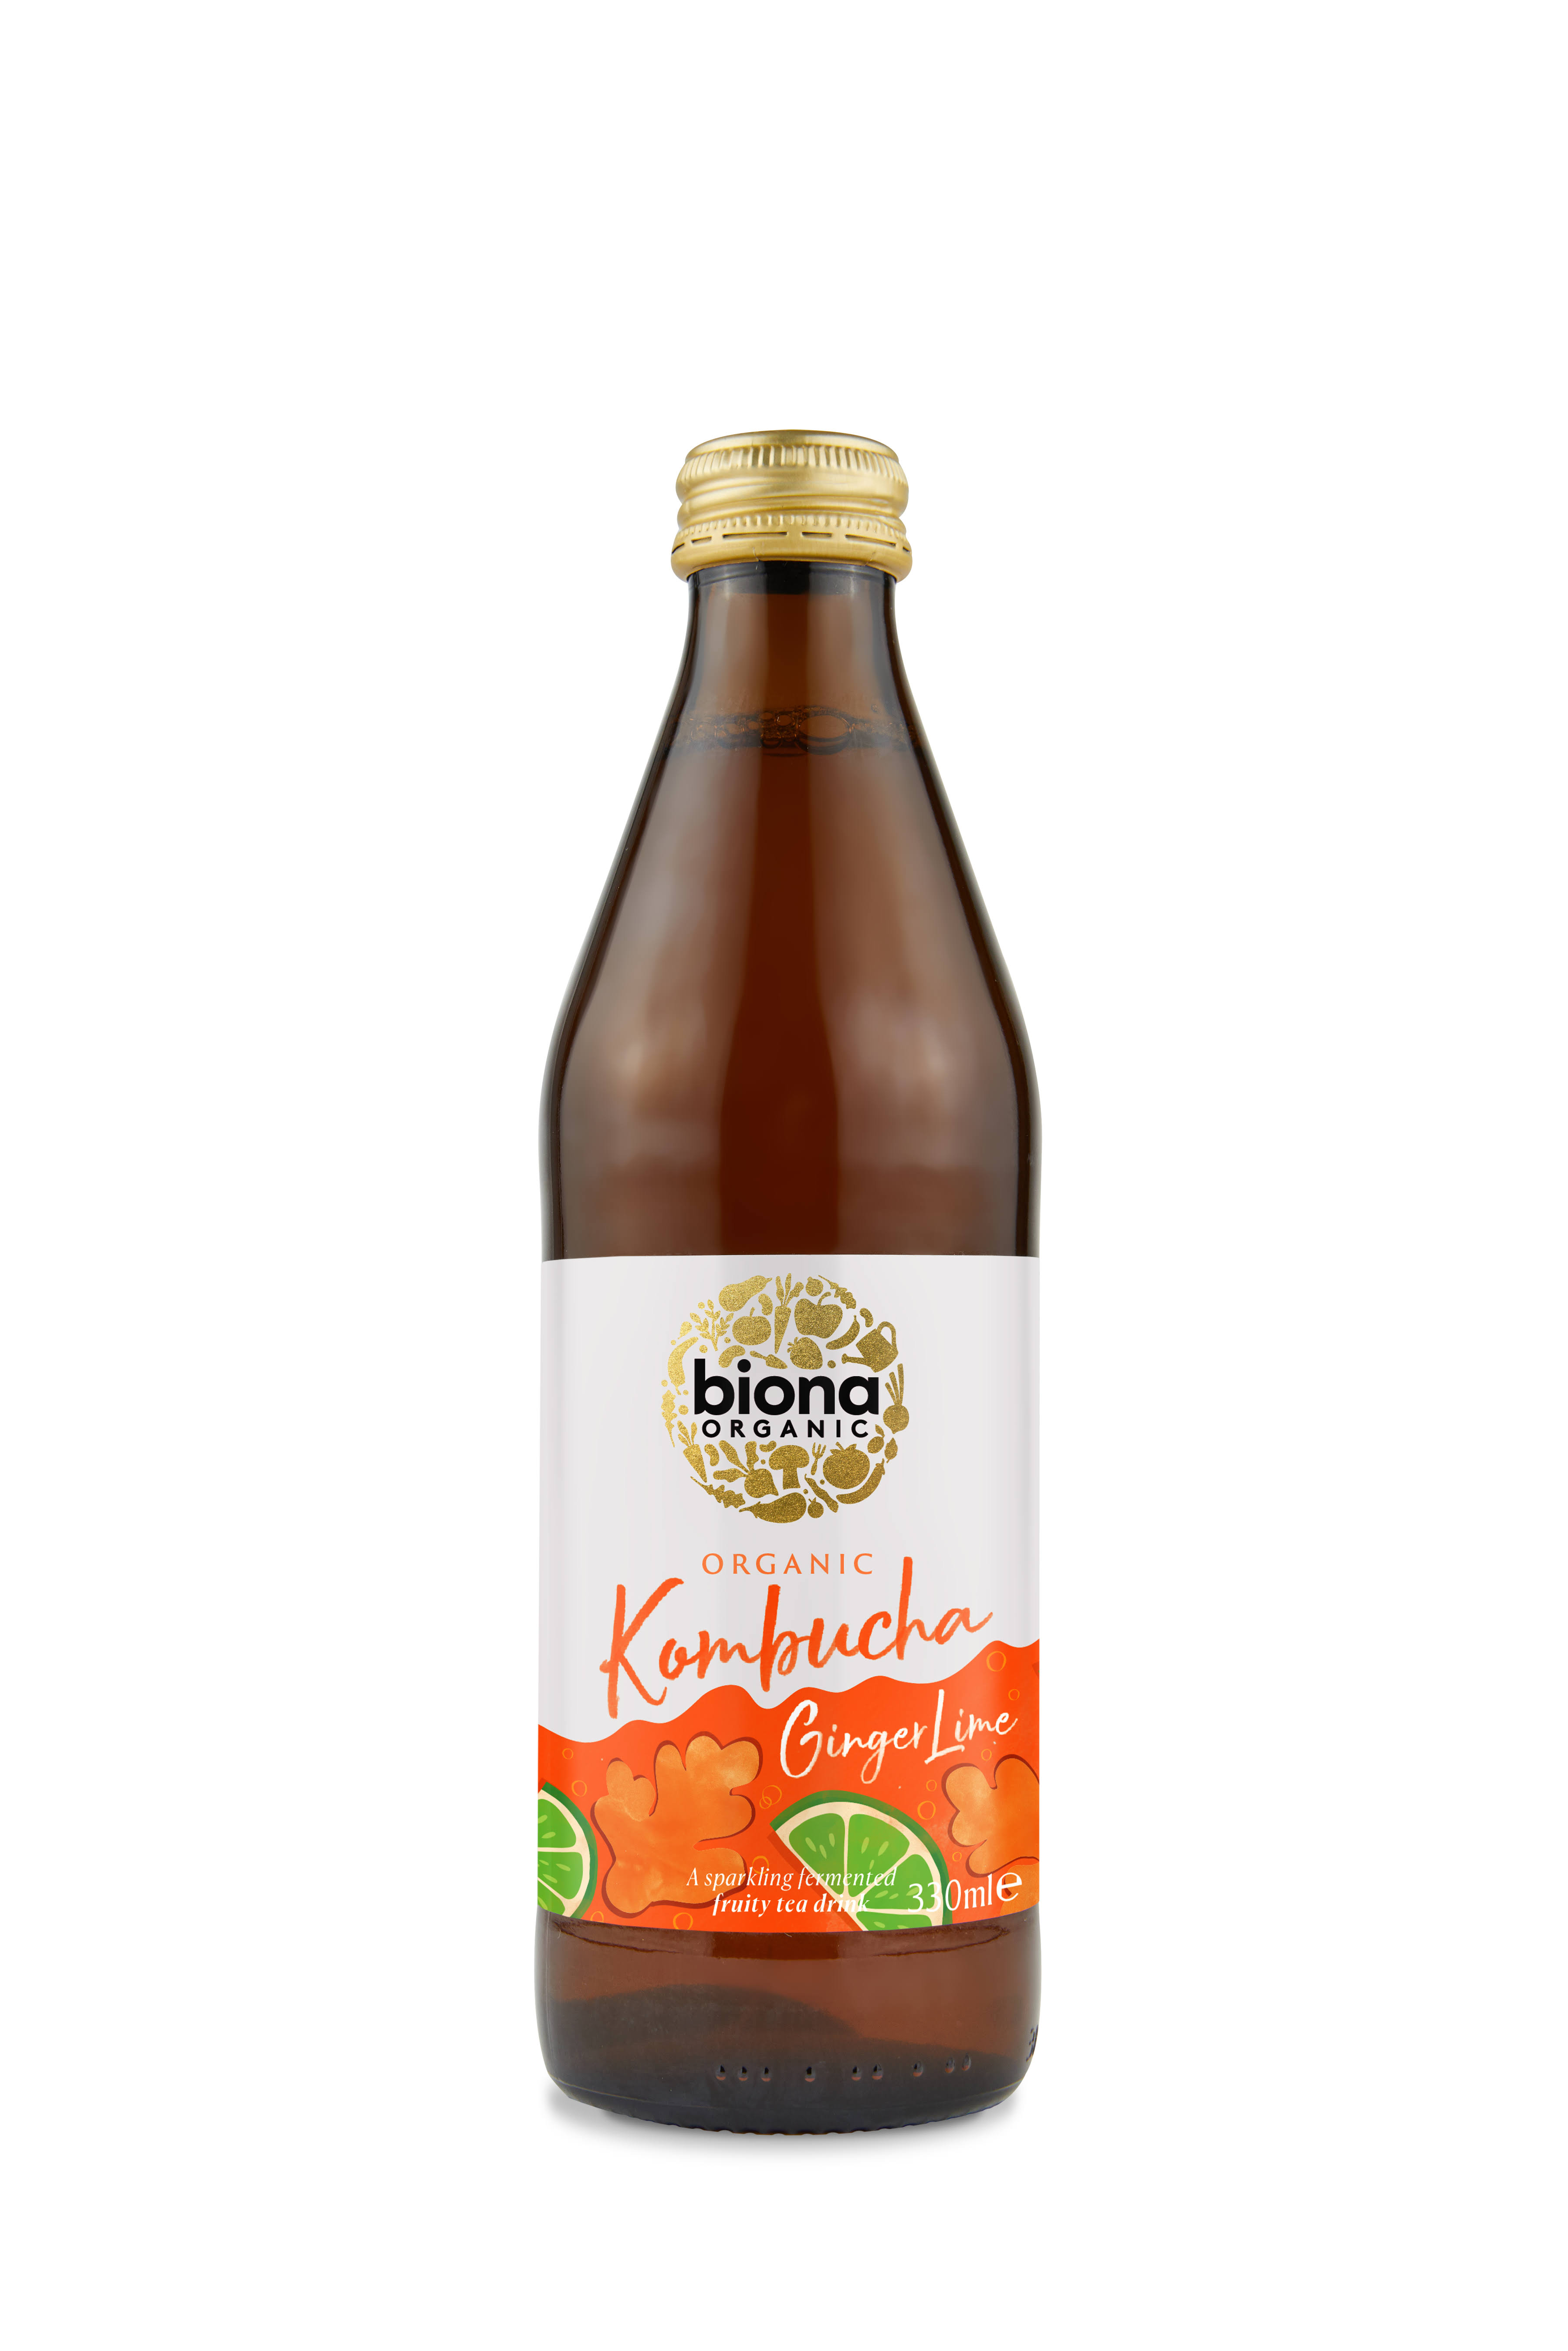 Biona Organic Kombucha Ginger and Lime Packs - 330ml, 6pk